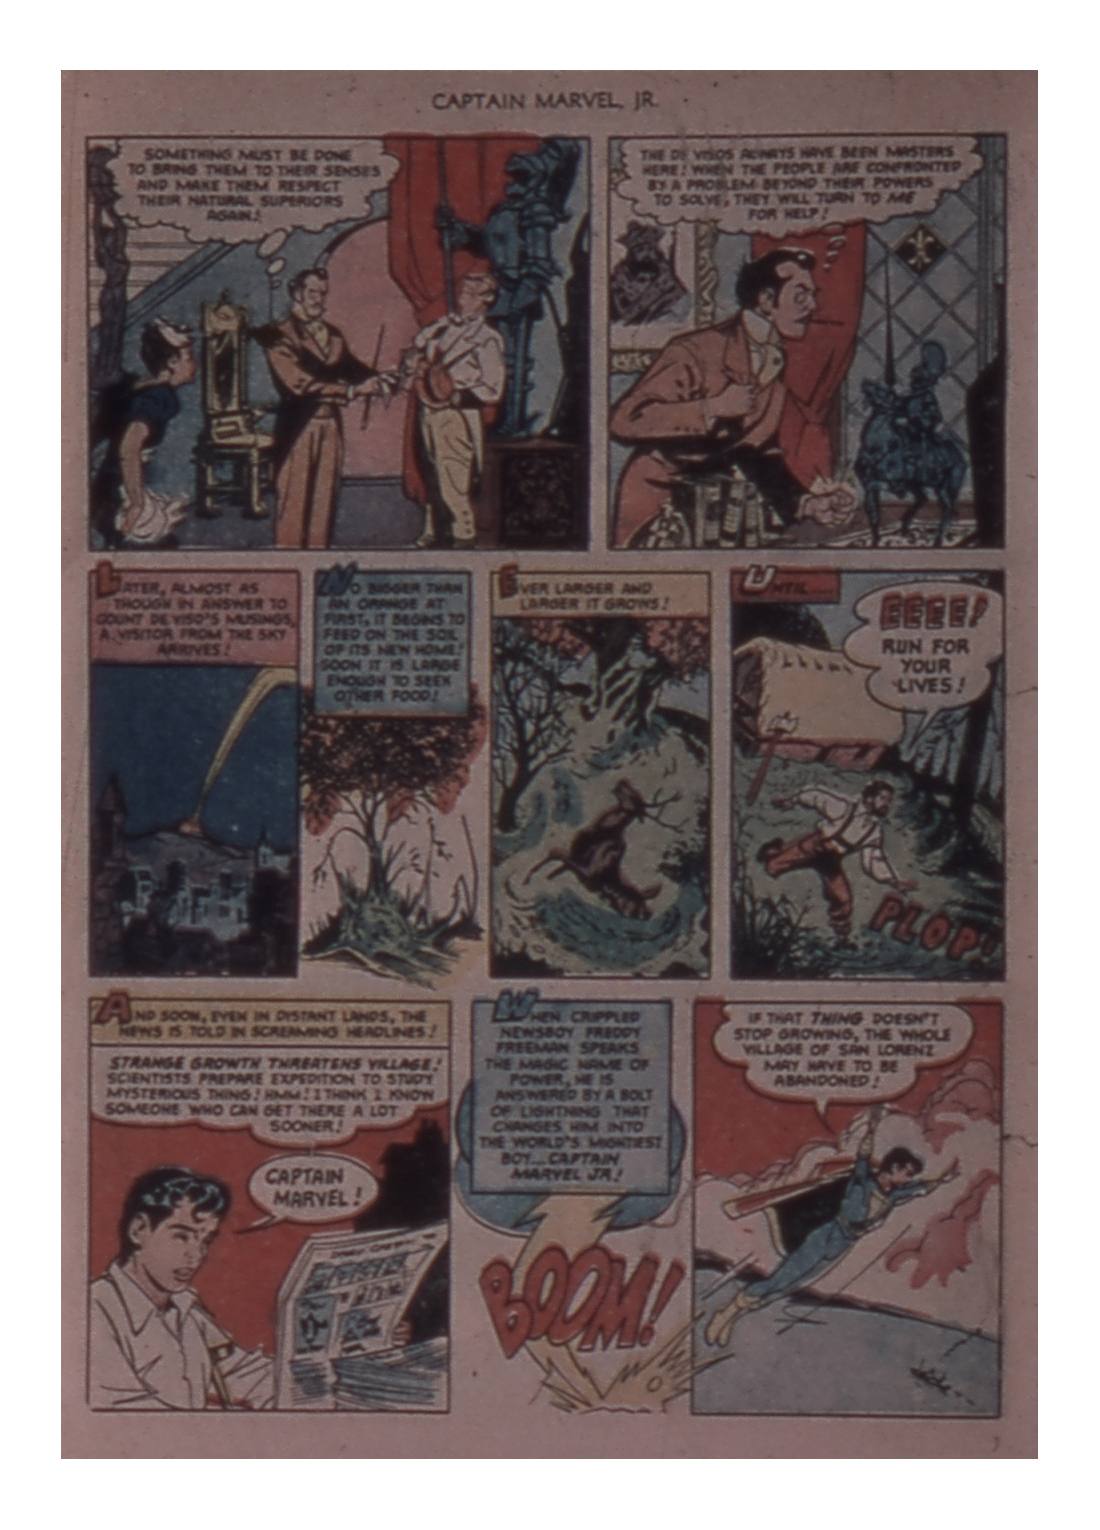 Read online Captain Marvel, Jr. comic -  Issue #103 - 6